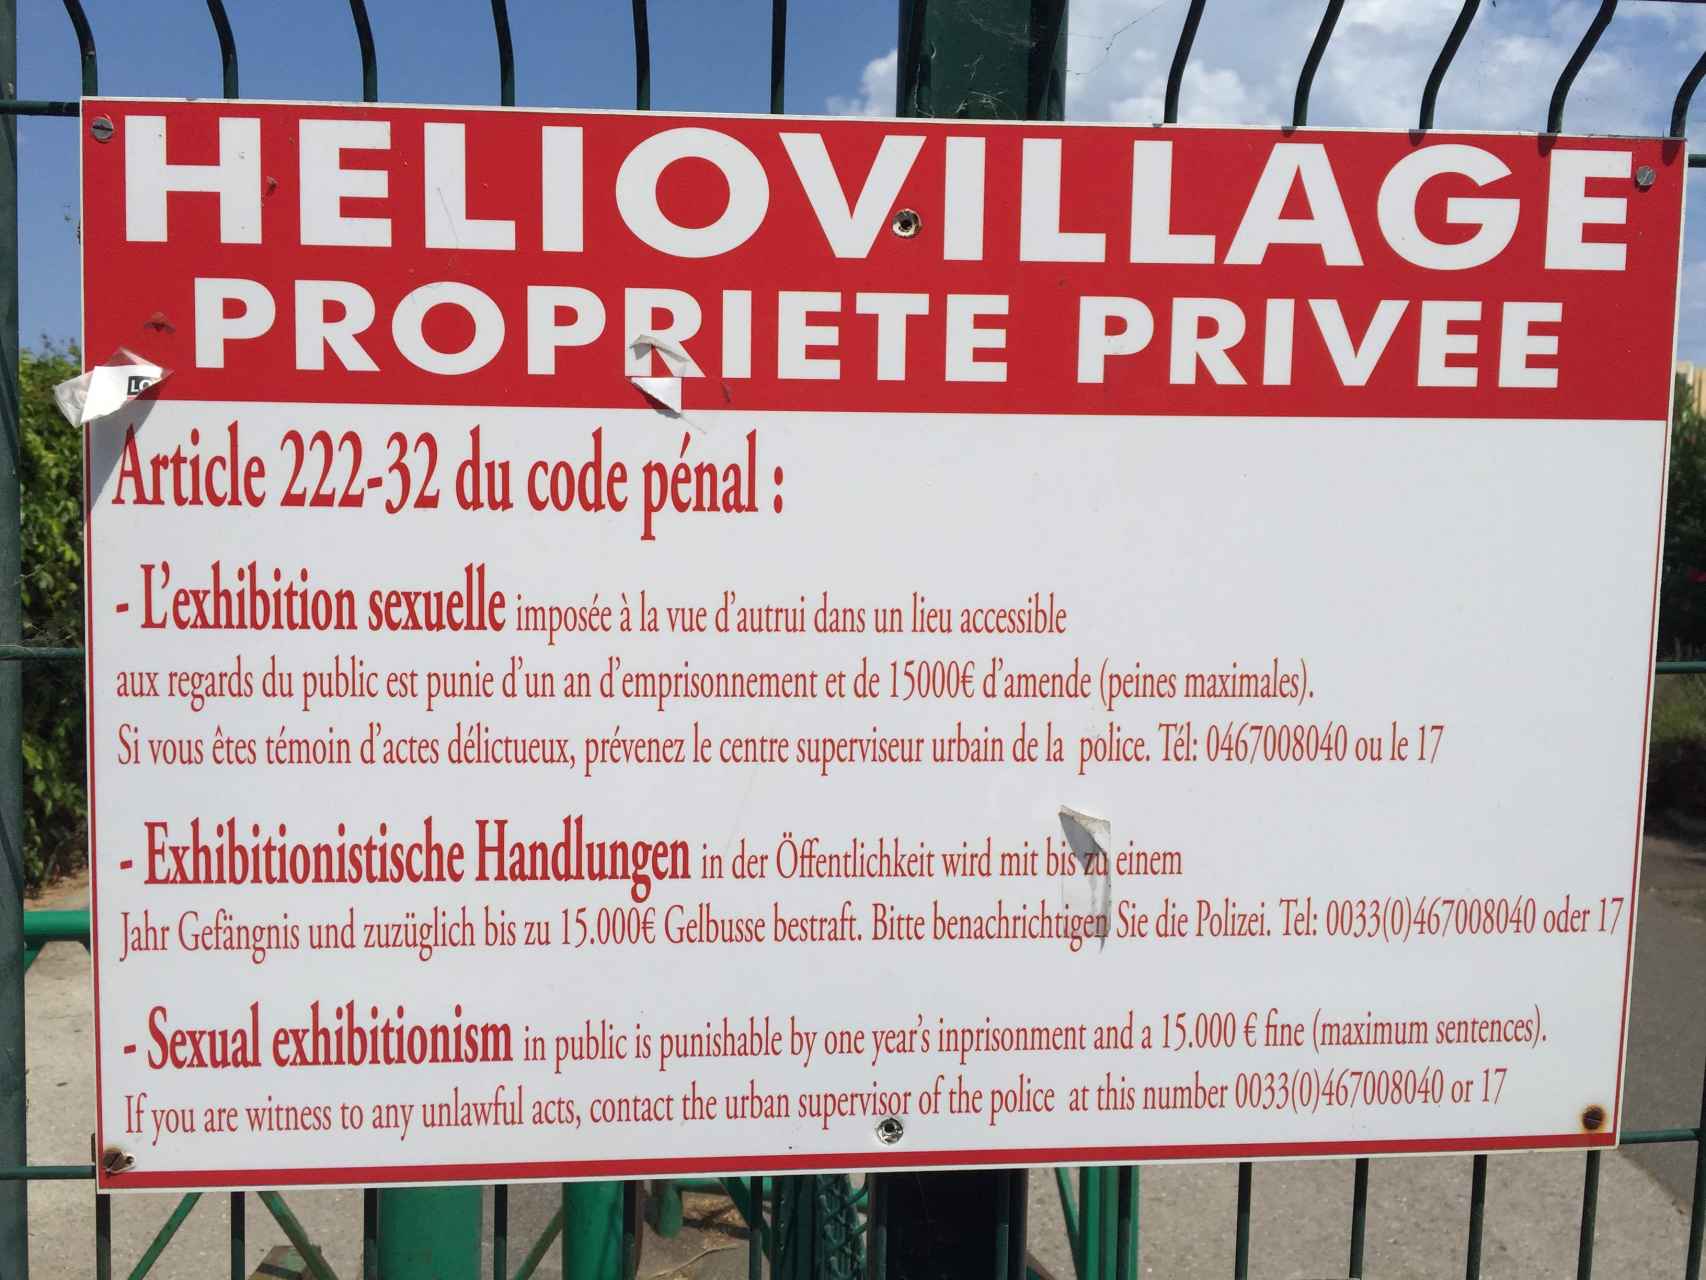 Los carteles en Heliópolis advierten de que practicar sexo en público se sanciona con 15.000 euros. Pocas normas se respetan tan poco.